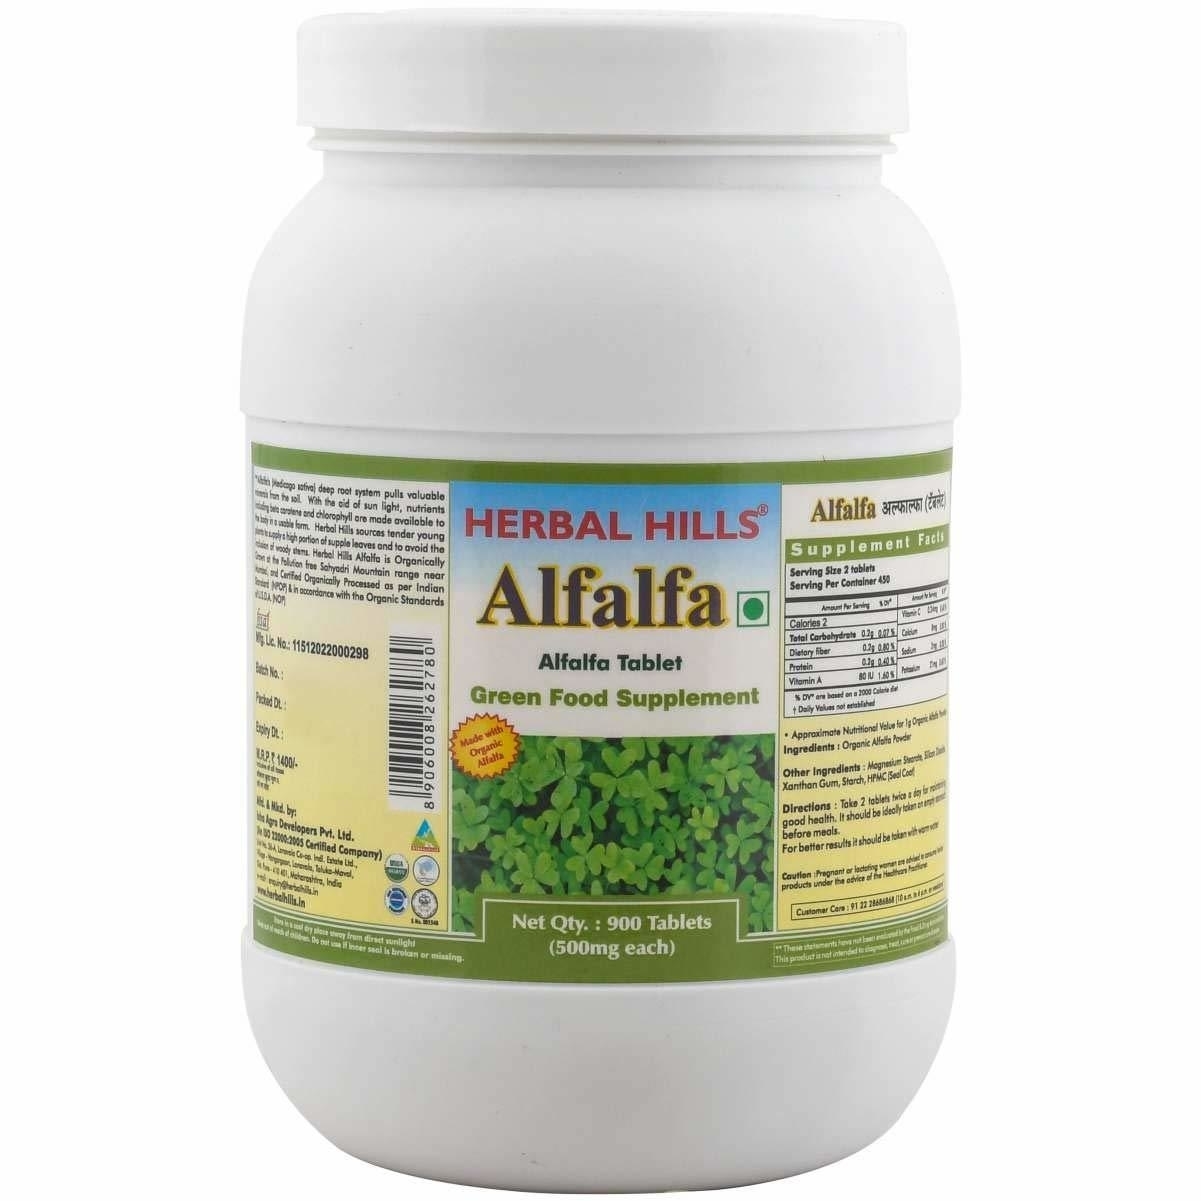 Herbal Hills Alfalfa 900 Tablets